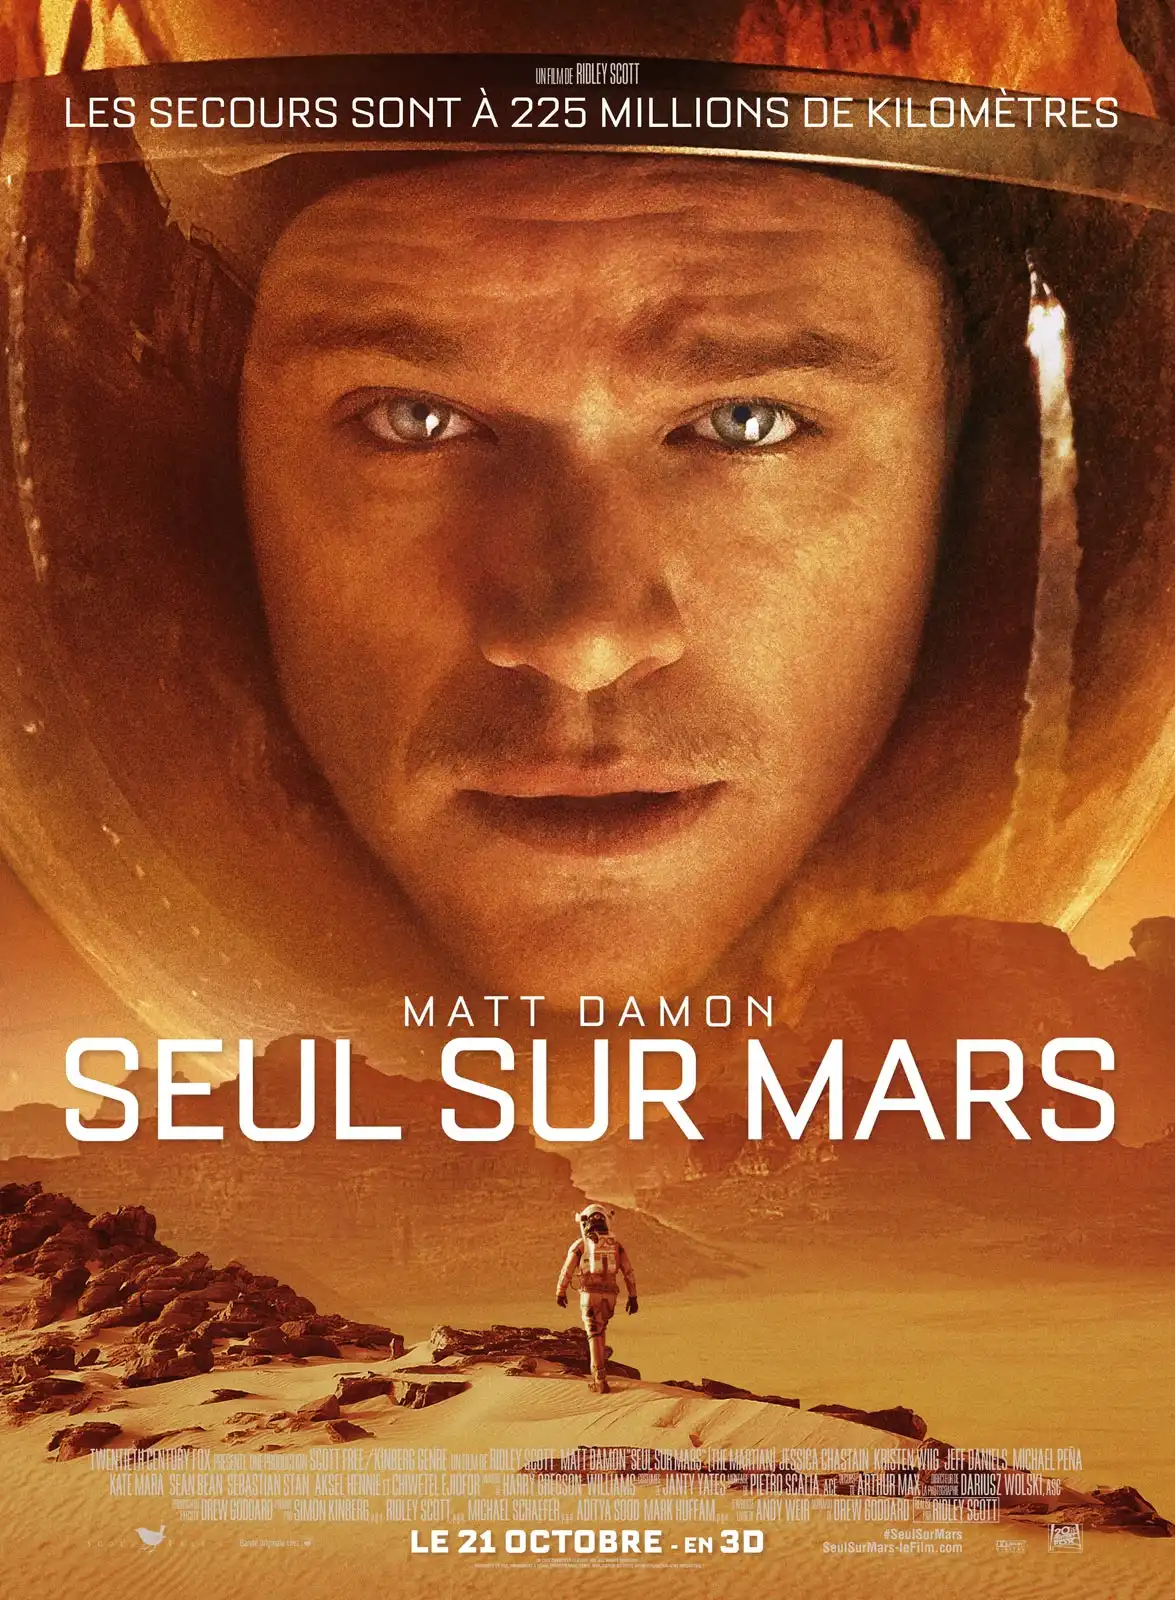 Seul sur Mars FRENCH BluRay 1080p 2015